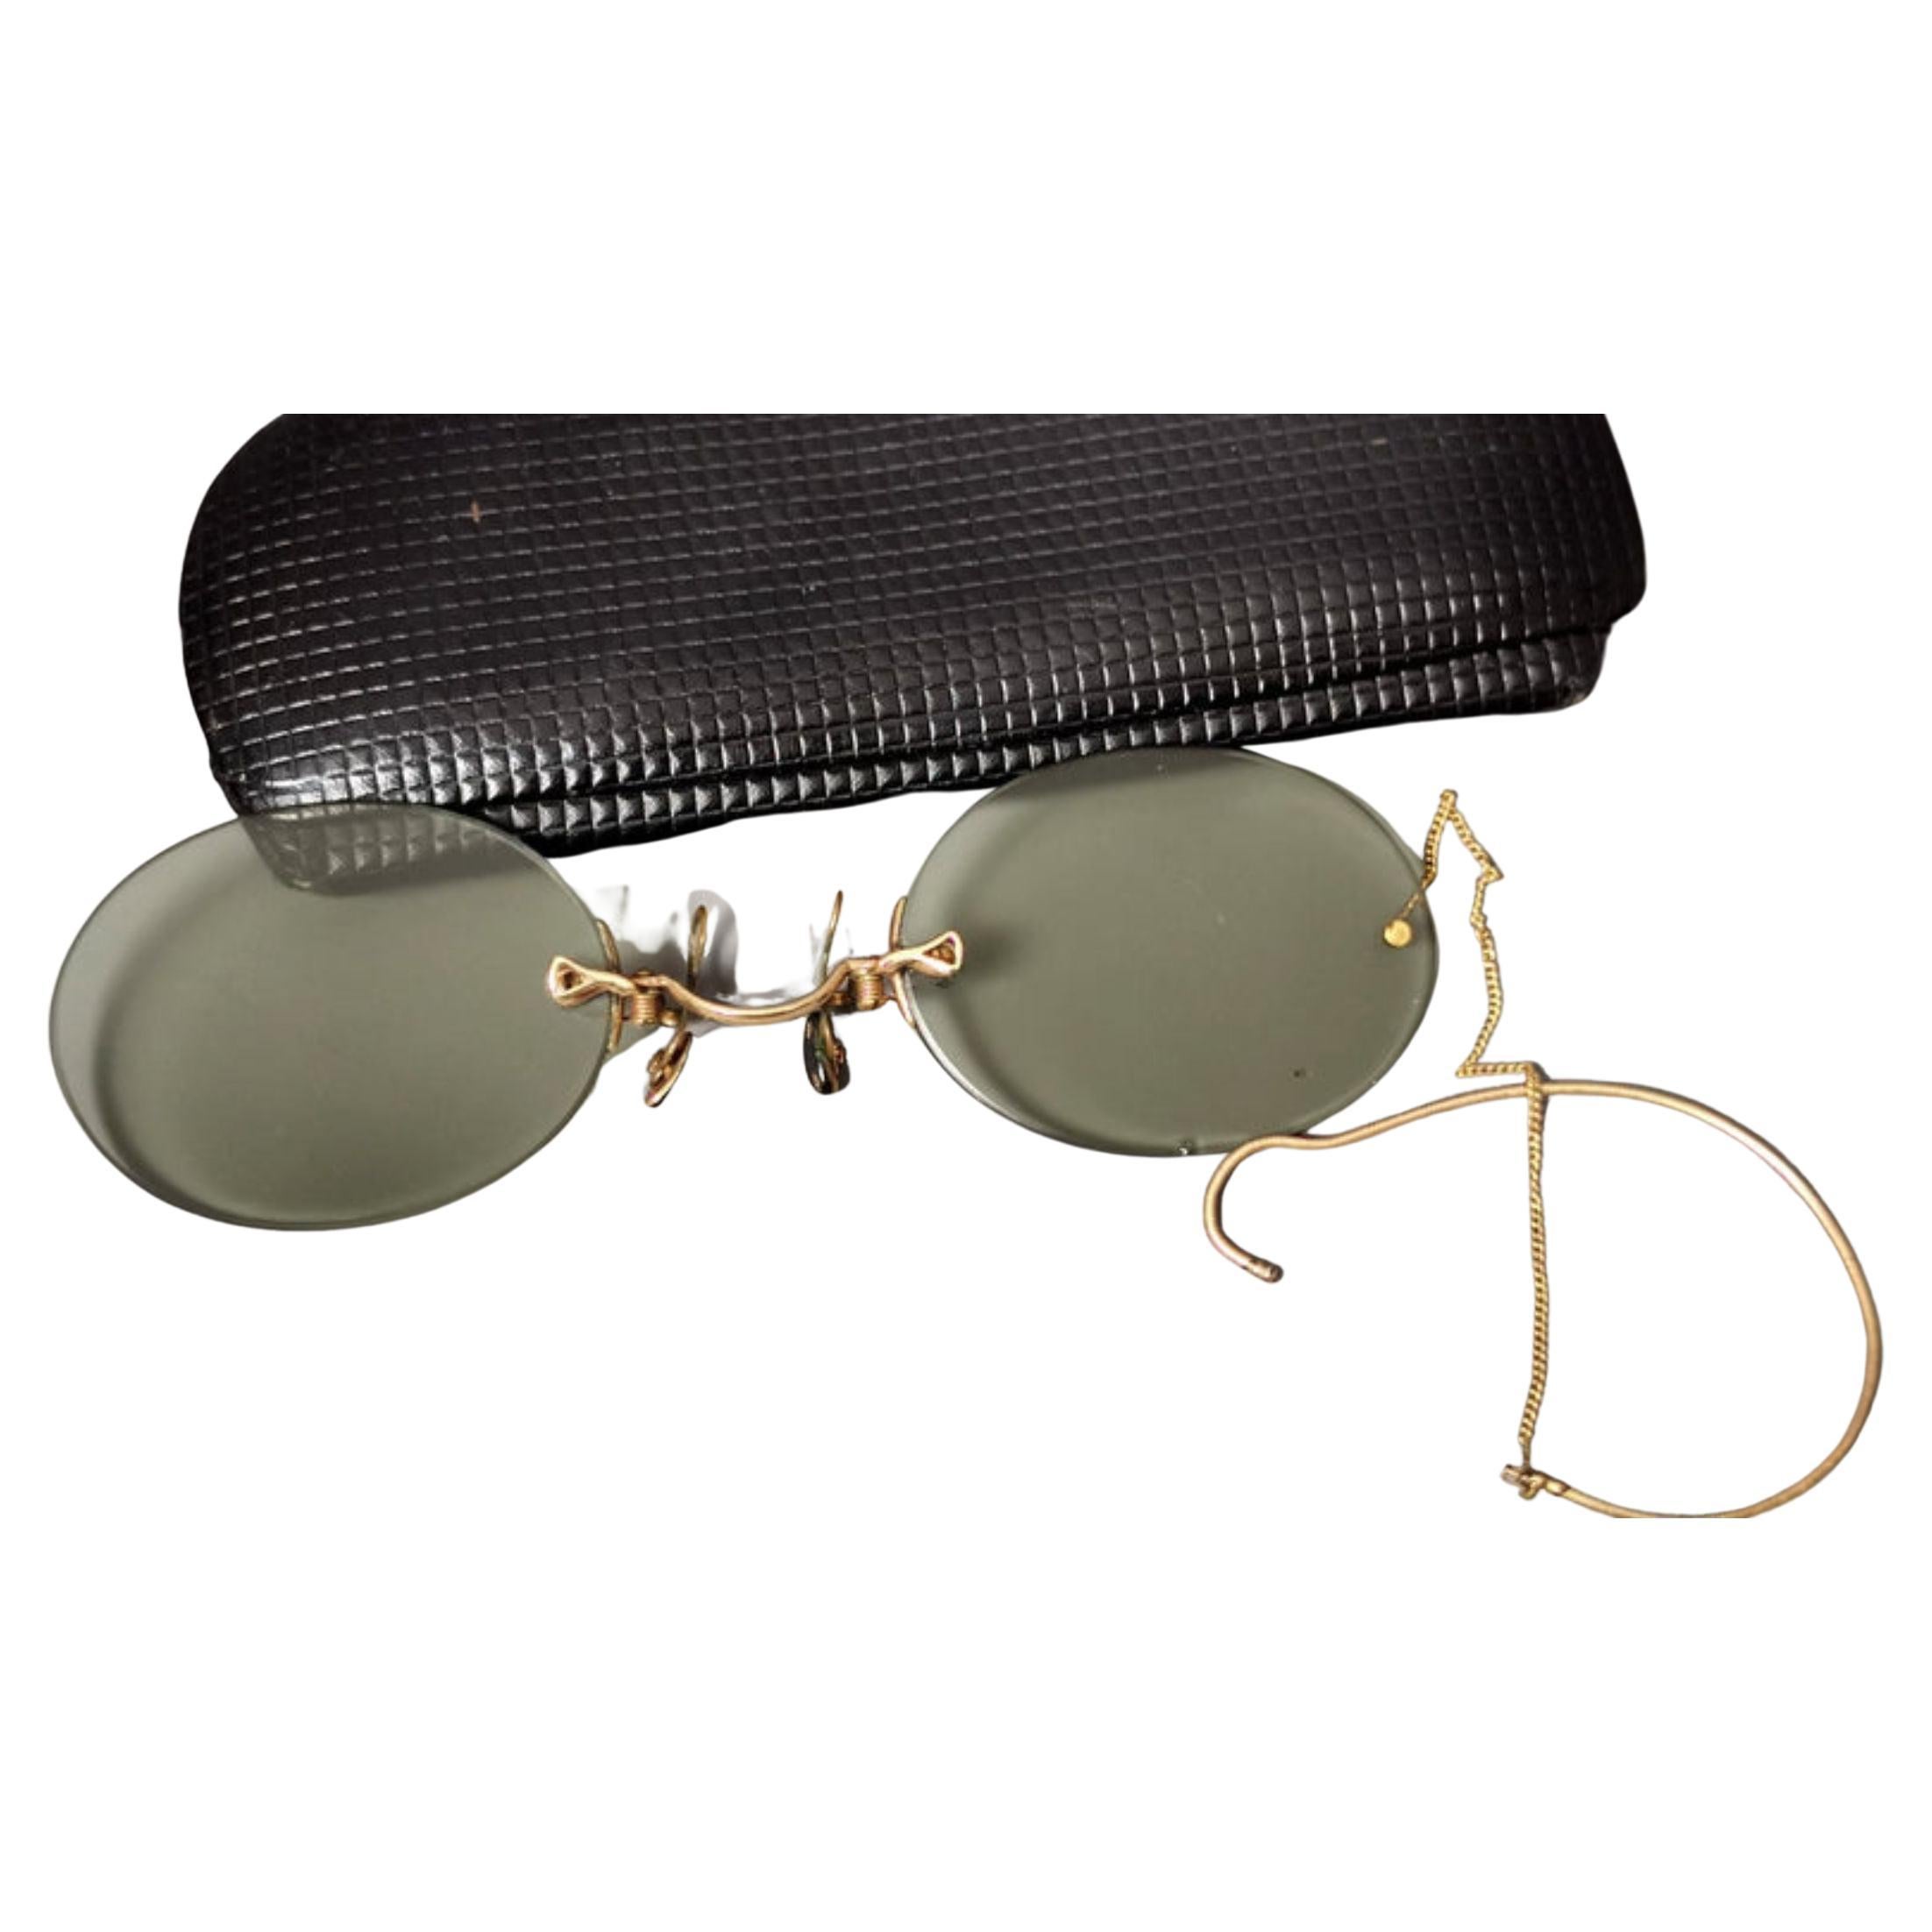 Rare antique sunglasses, 9kt gold, pince nez, cased 